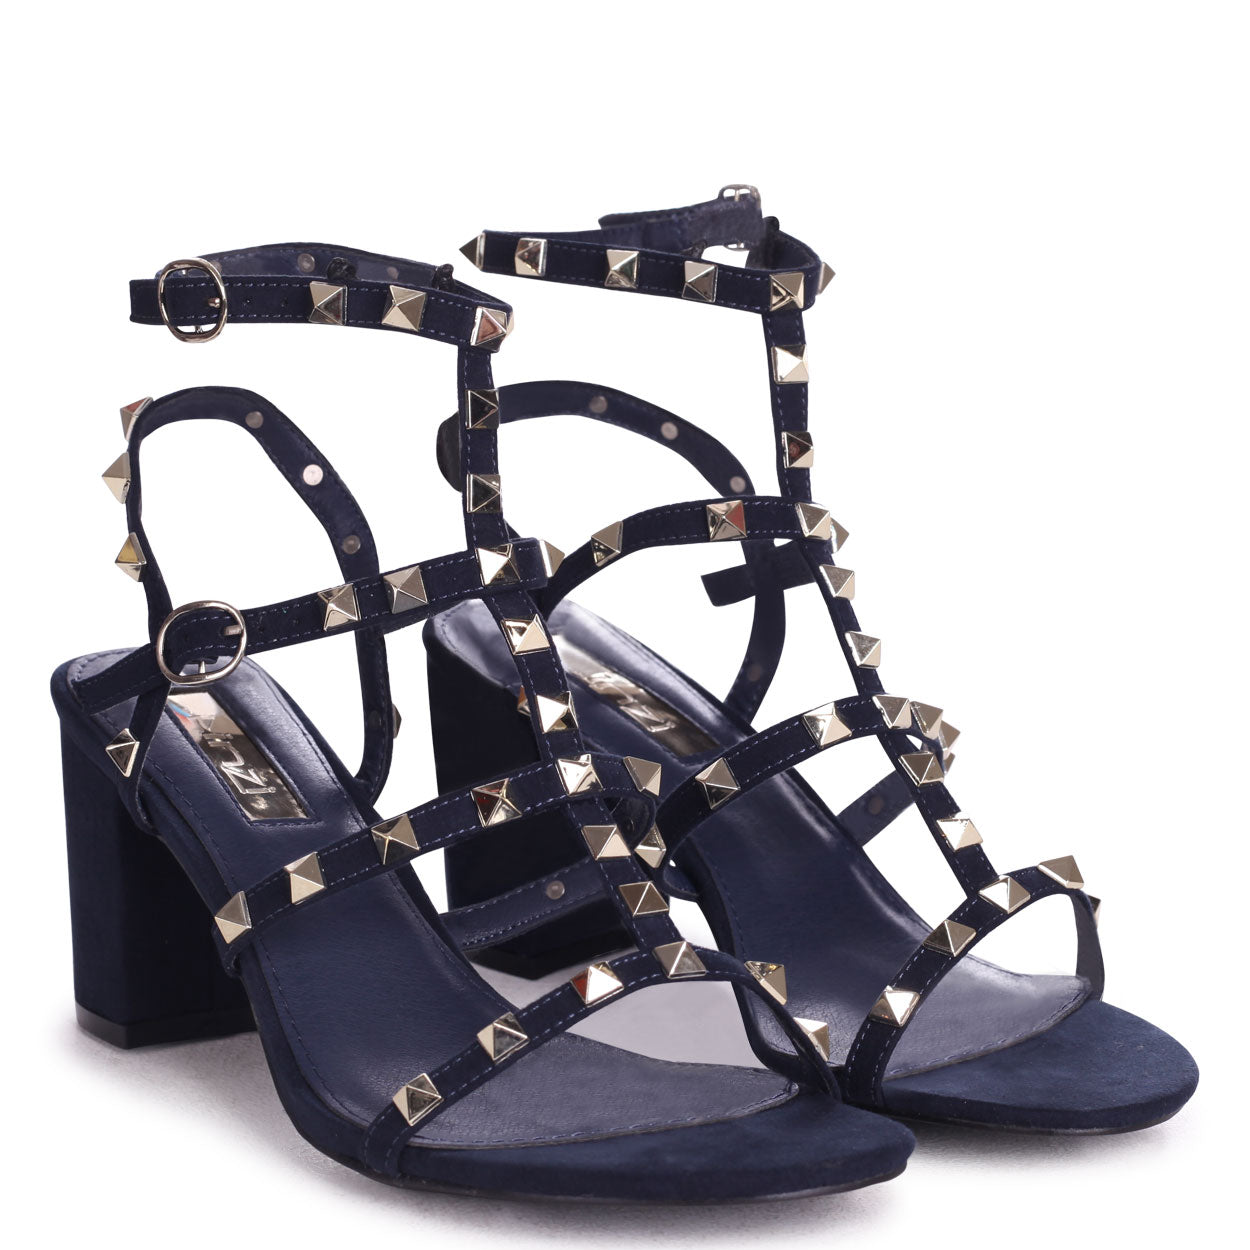 NEW ISABEL MARANT $1,250 Lucie black leather studded gladiator sandals heels  38 | eBay